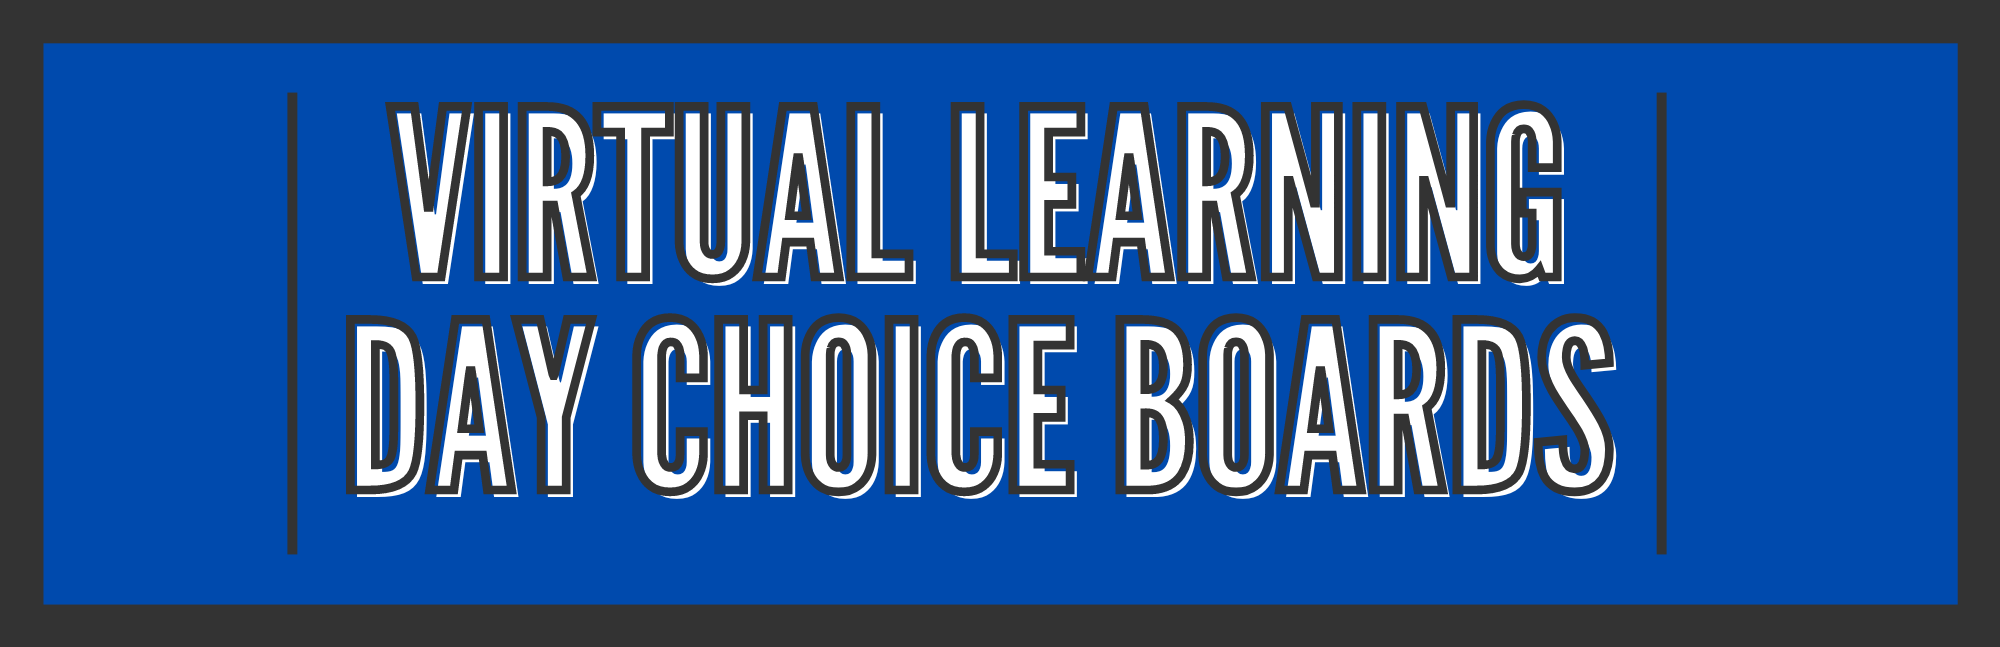 Virtual Learning Day choice board